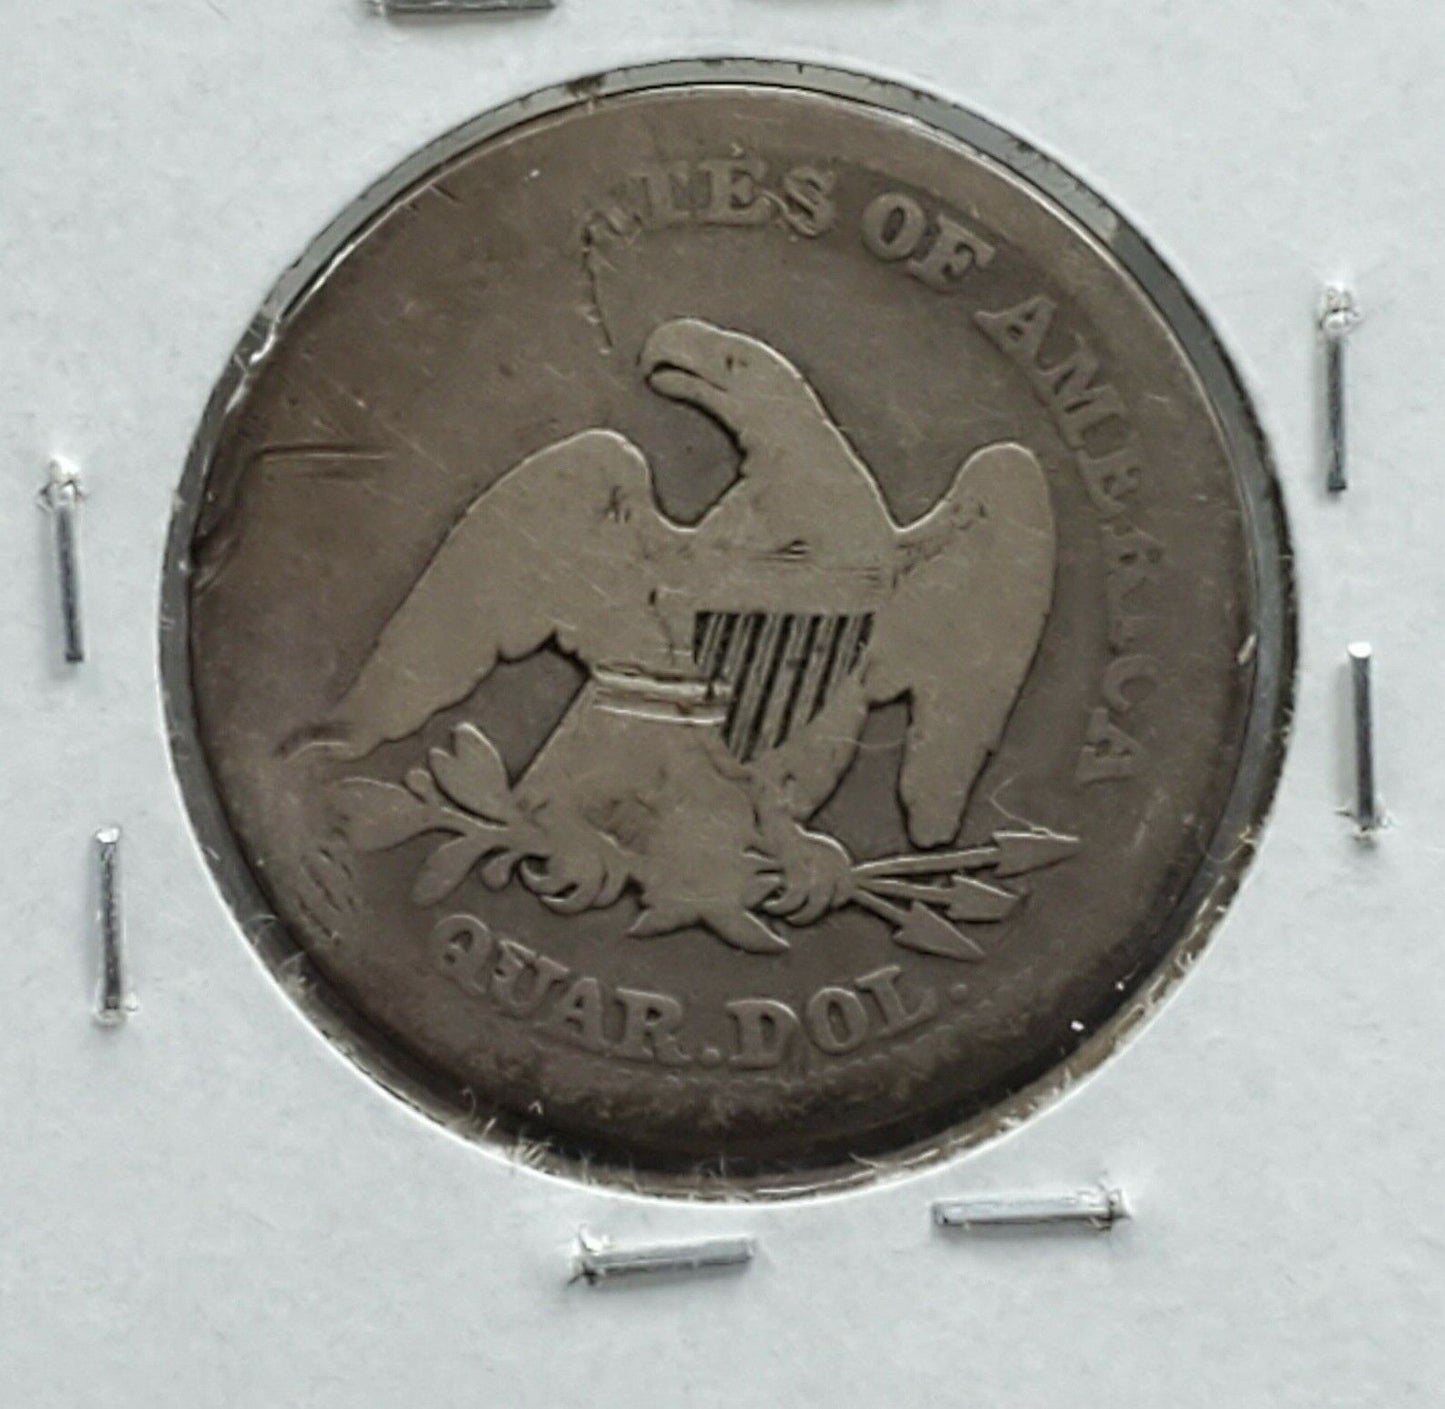 1857 P Seated Liberty Silver Quarter Coin Choice Circulated Condition